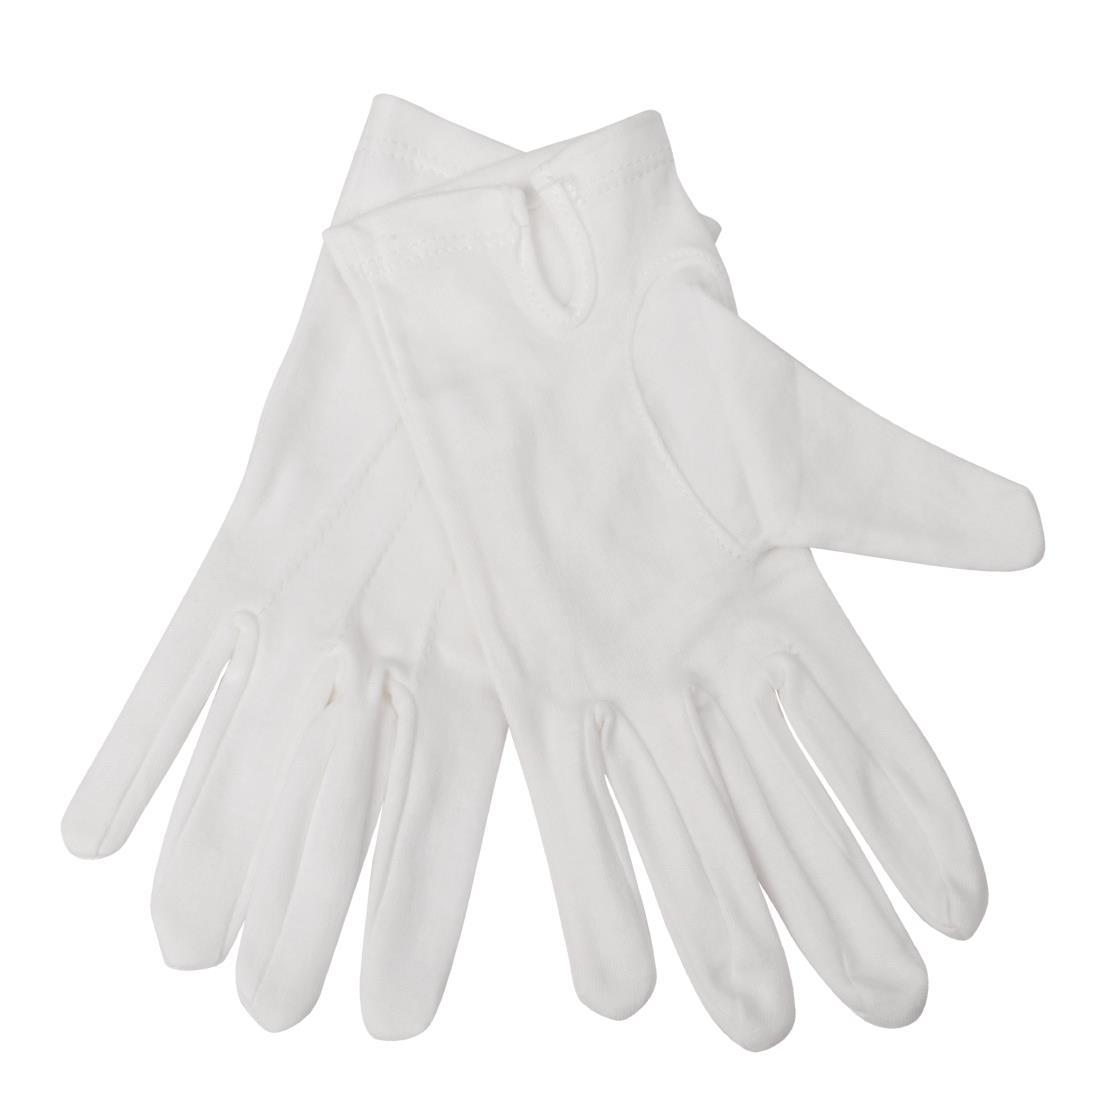 Ladies Waiting Gloves White L - A545-L  - 1